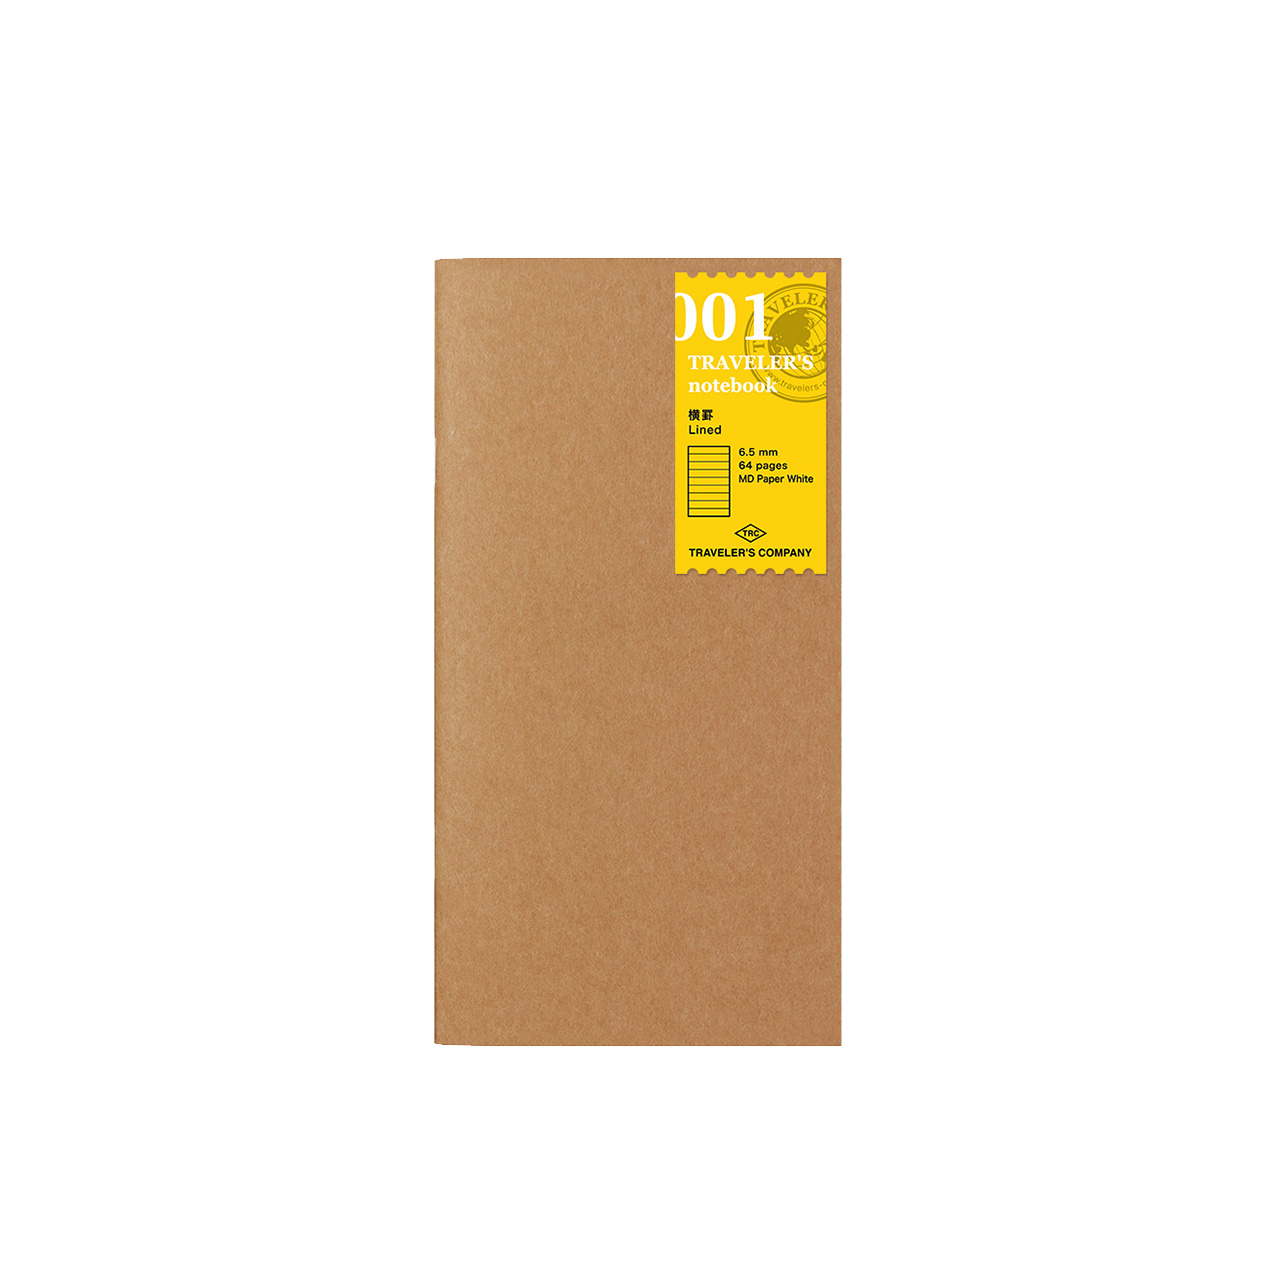 Books Kinokuniya: TRAVELER'S notebook Refill <Regular Size> 6.5mm Ruled  Line 001 / TRAVELER'S COMPANY (4902805142458)